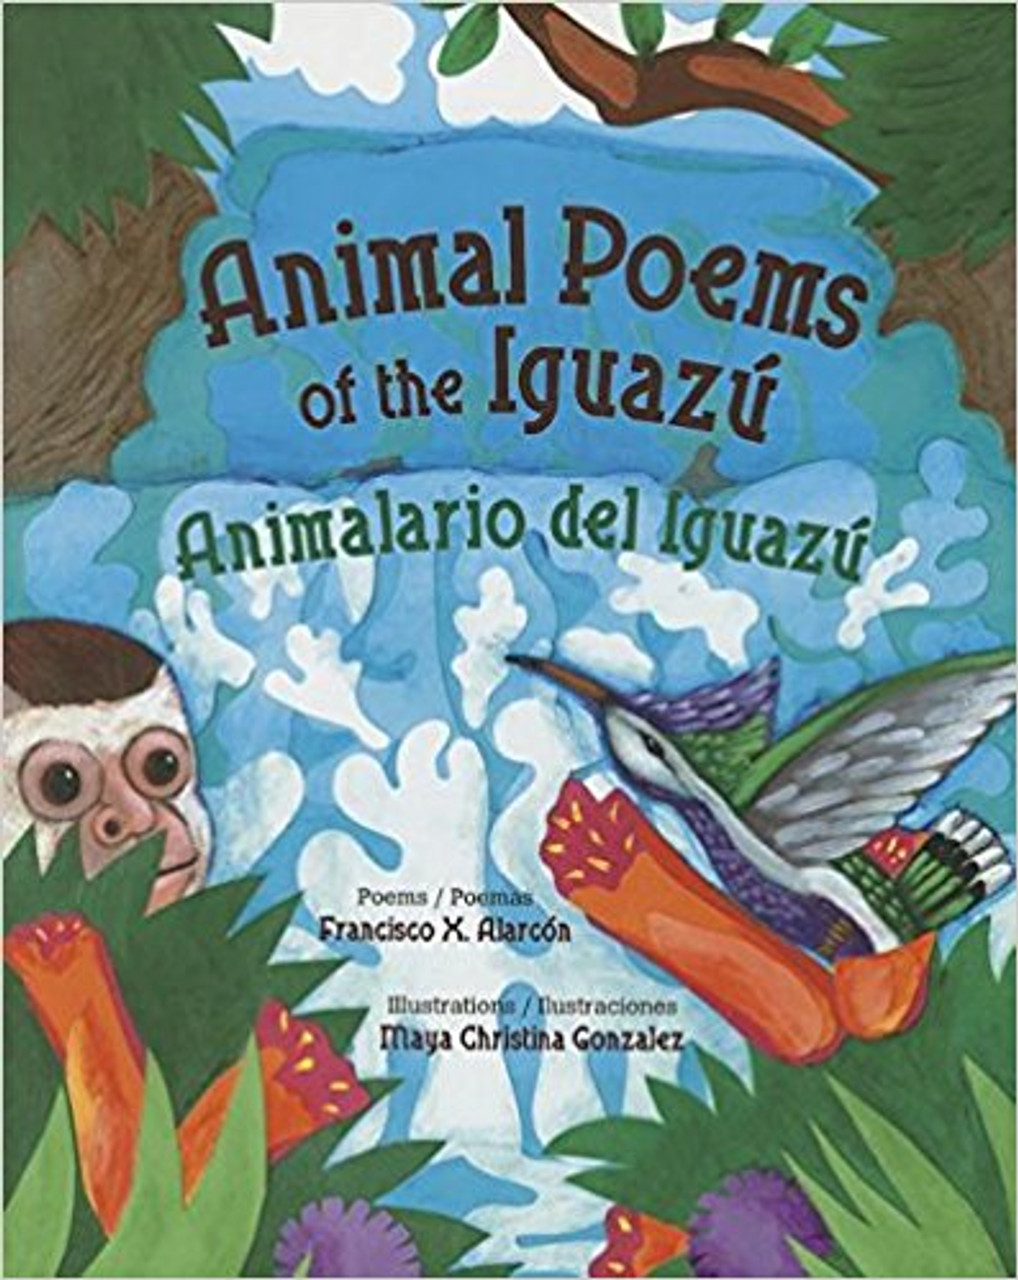 Animal Poems of the Iguazu: Animalario del Iguazu by Francisco X Alarcon by Francisco X Alarcon